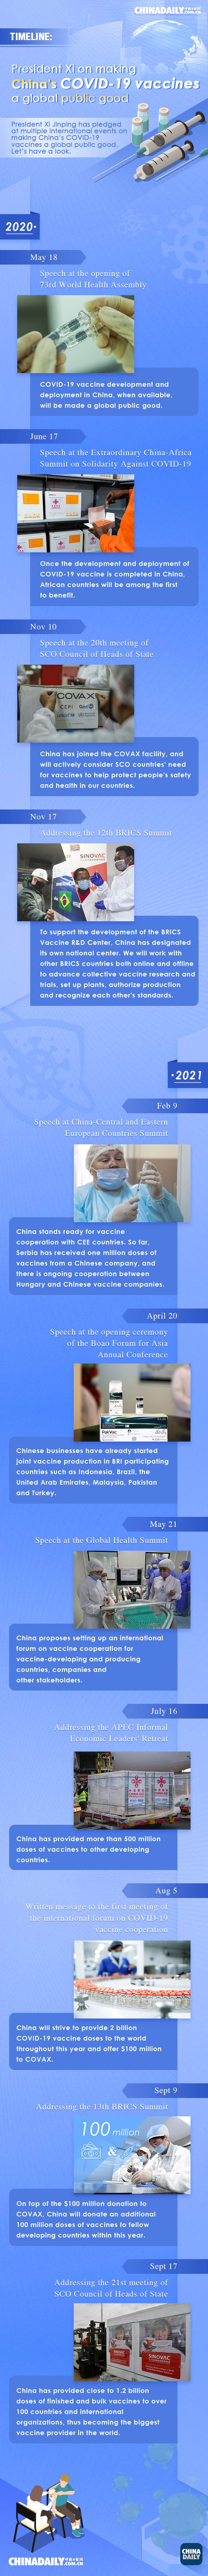 Xi on making China's COVID-19 vaccines a global public good.jpeg